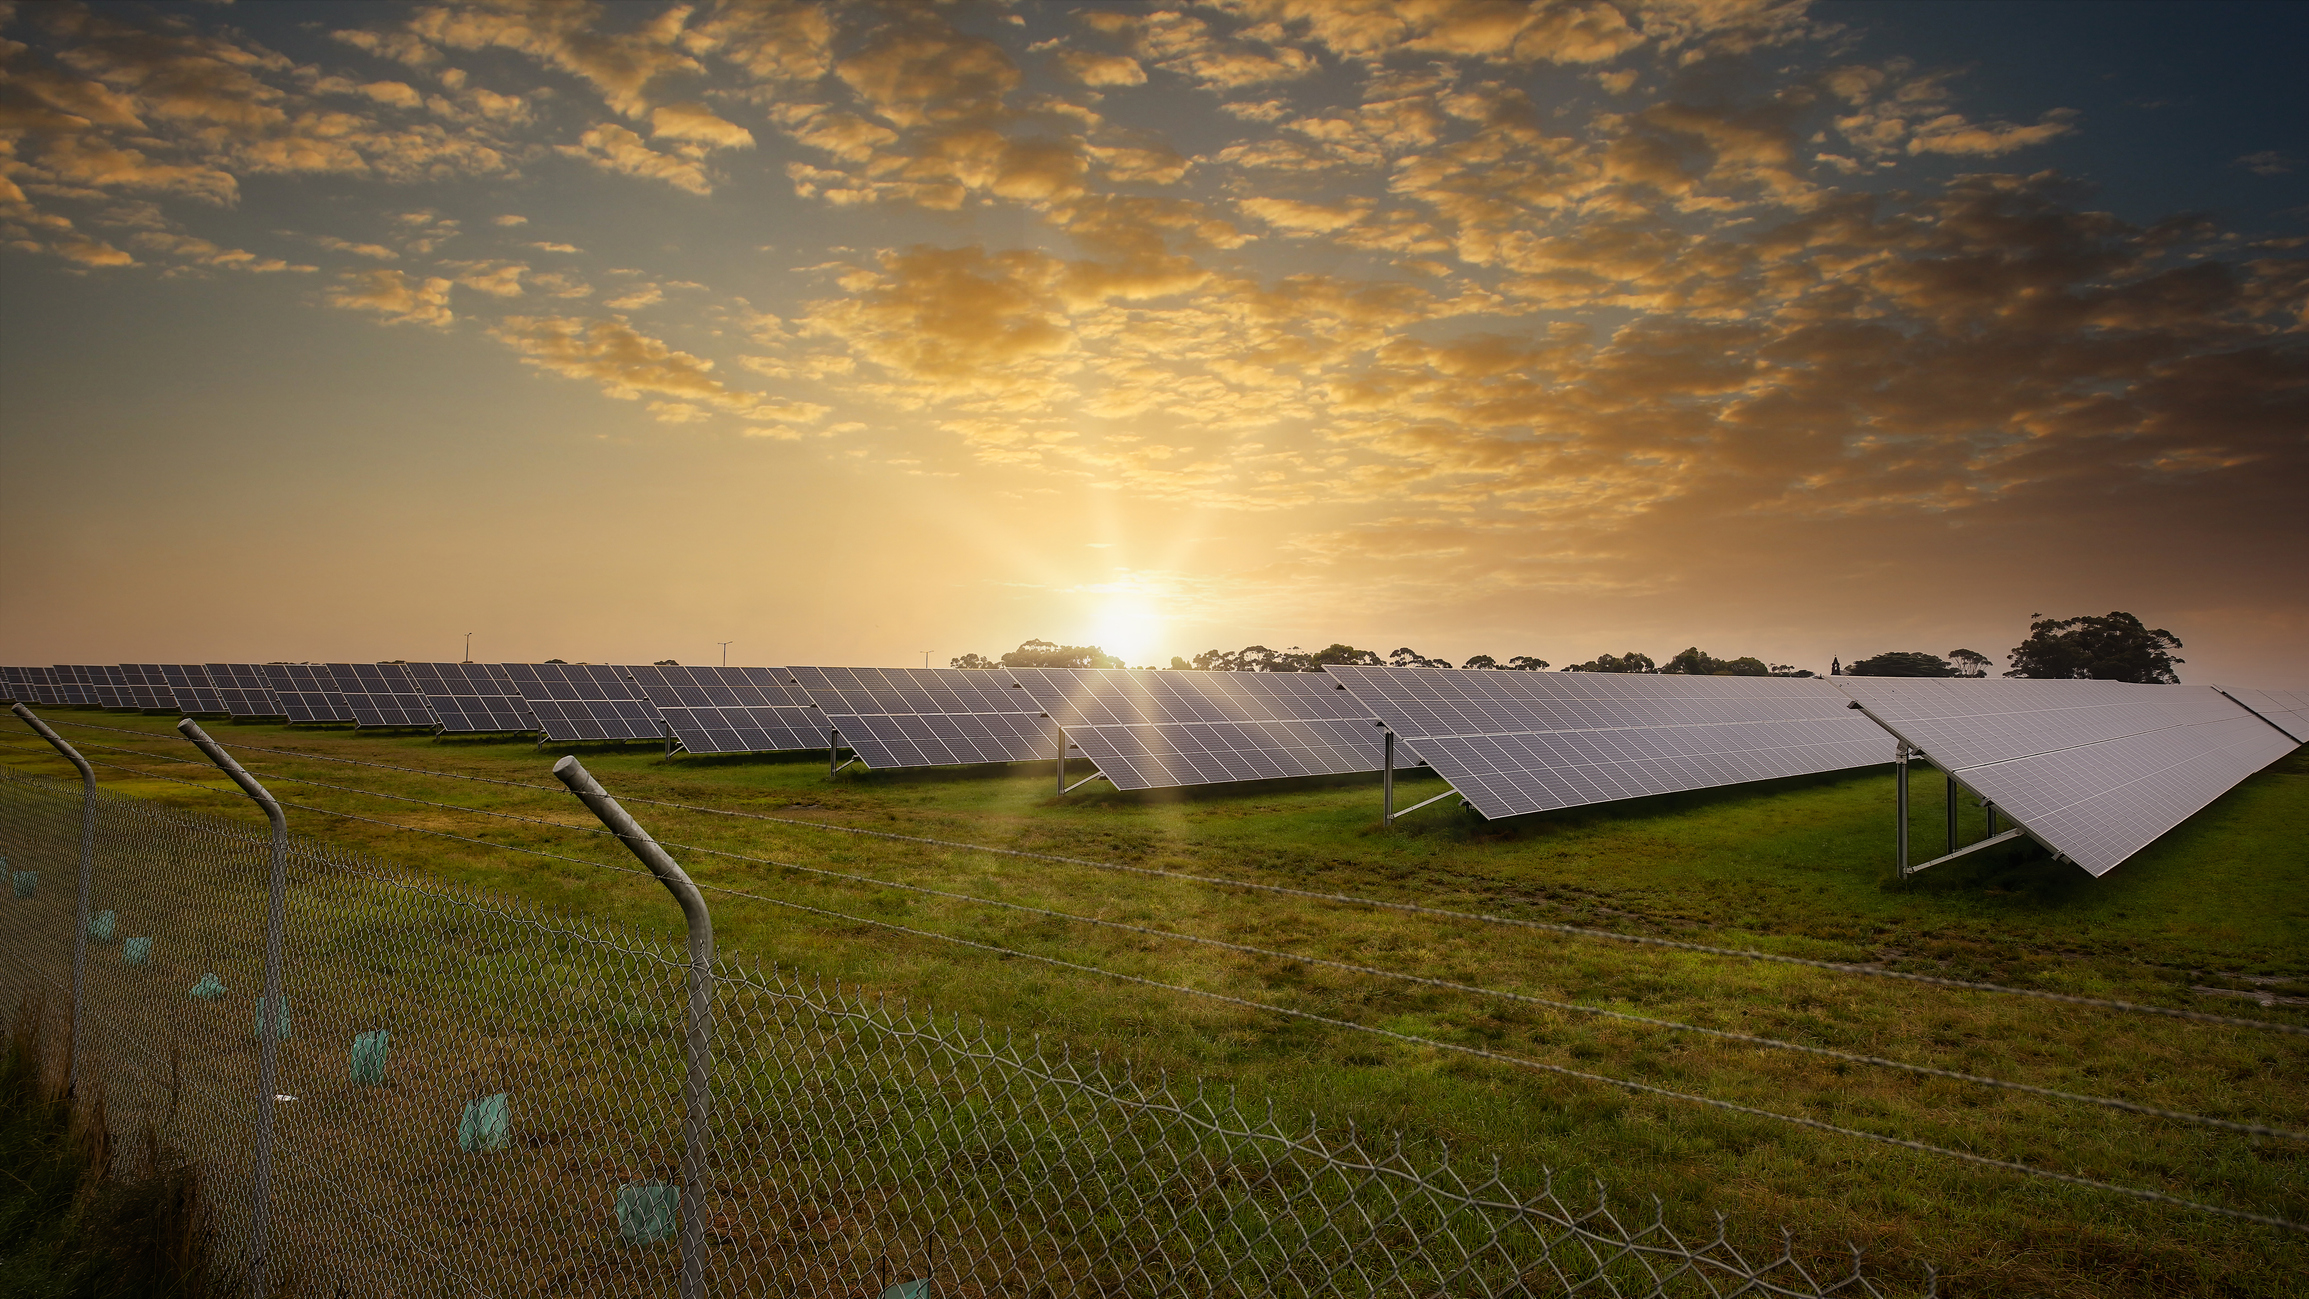 Field of solar panels outside Tullamarine airport at sunset